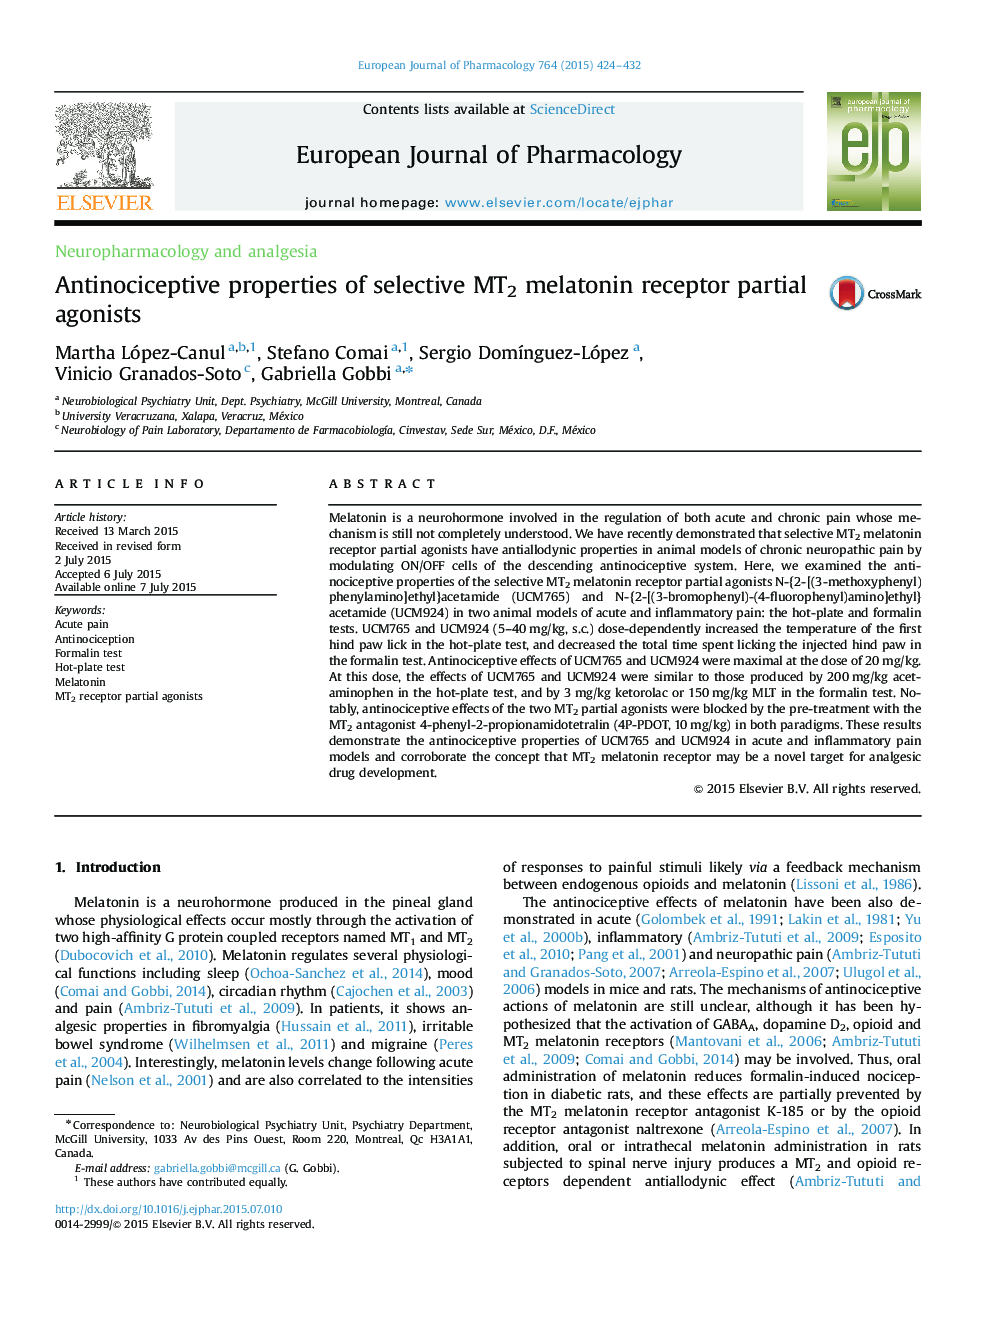 Antinociceptive properties of selective MT2 melatonin receptor partial agonists